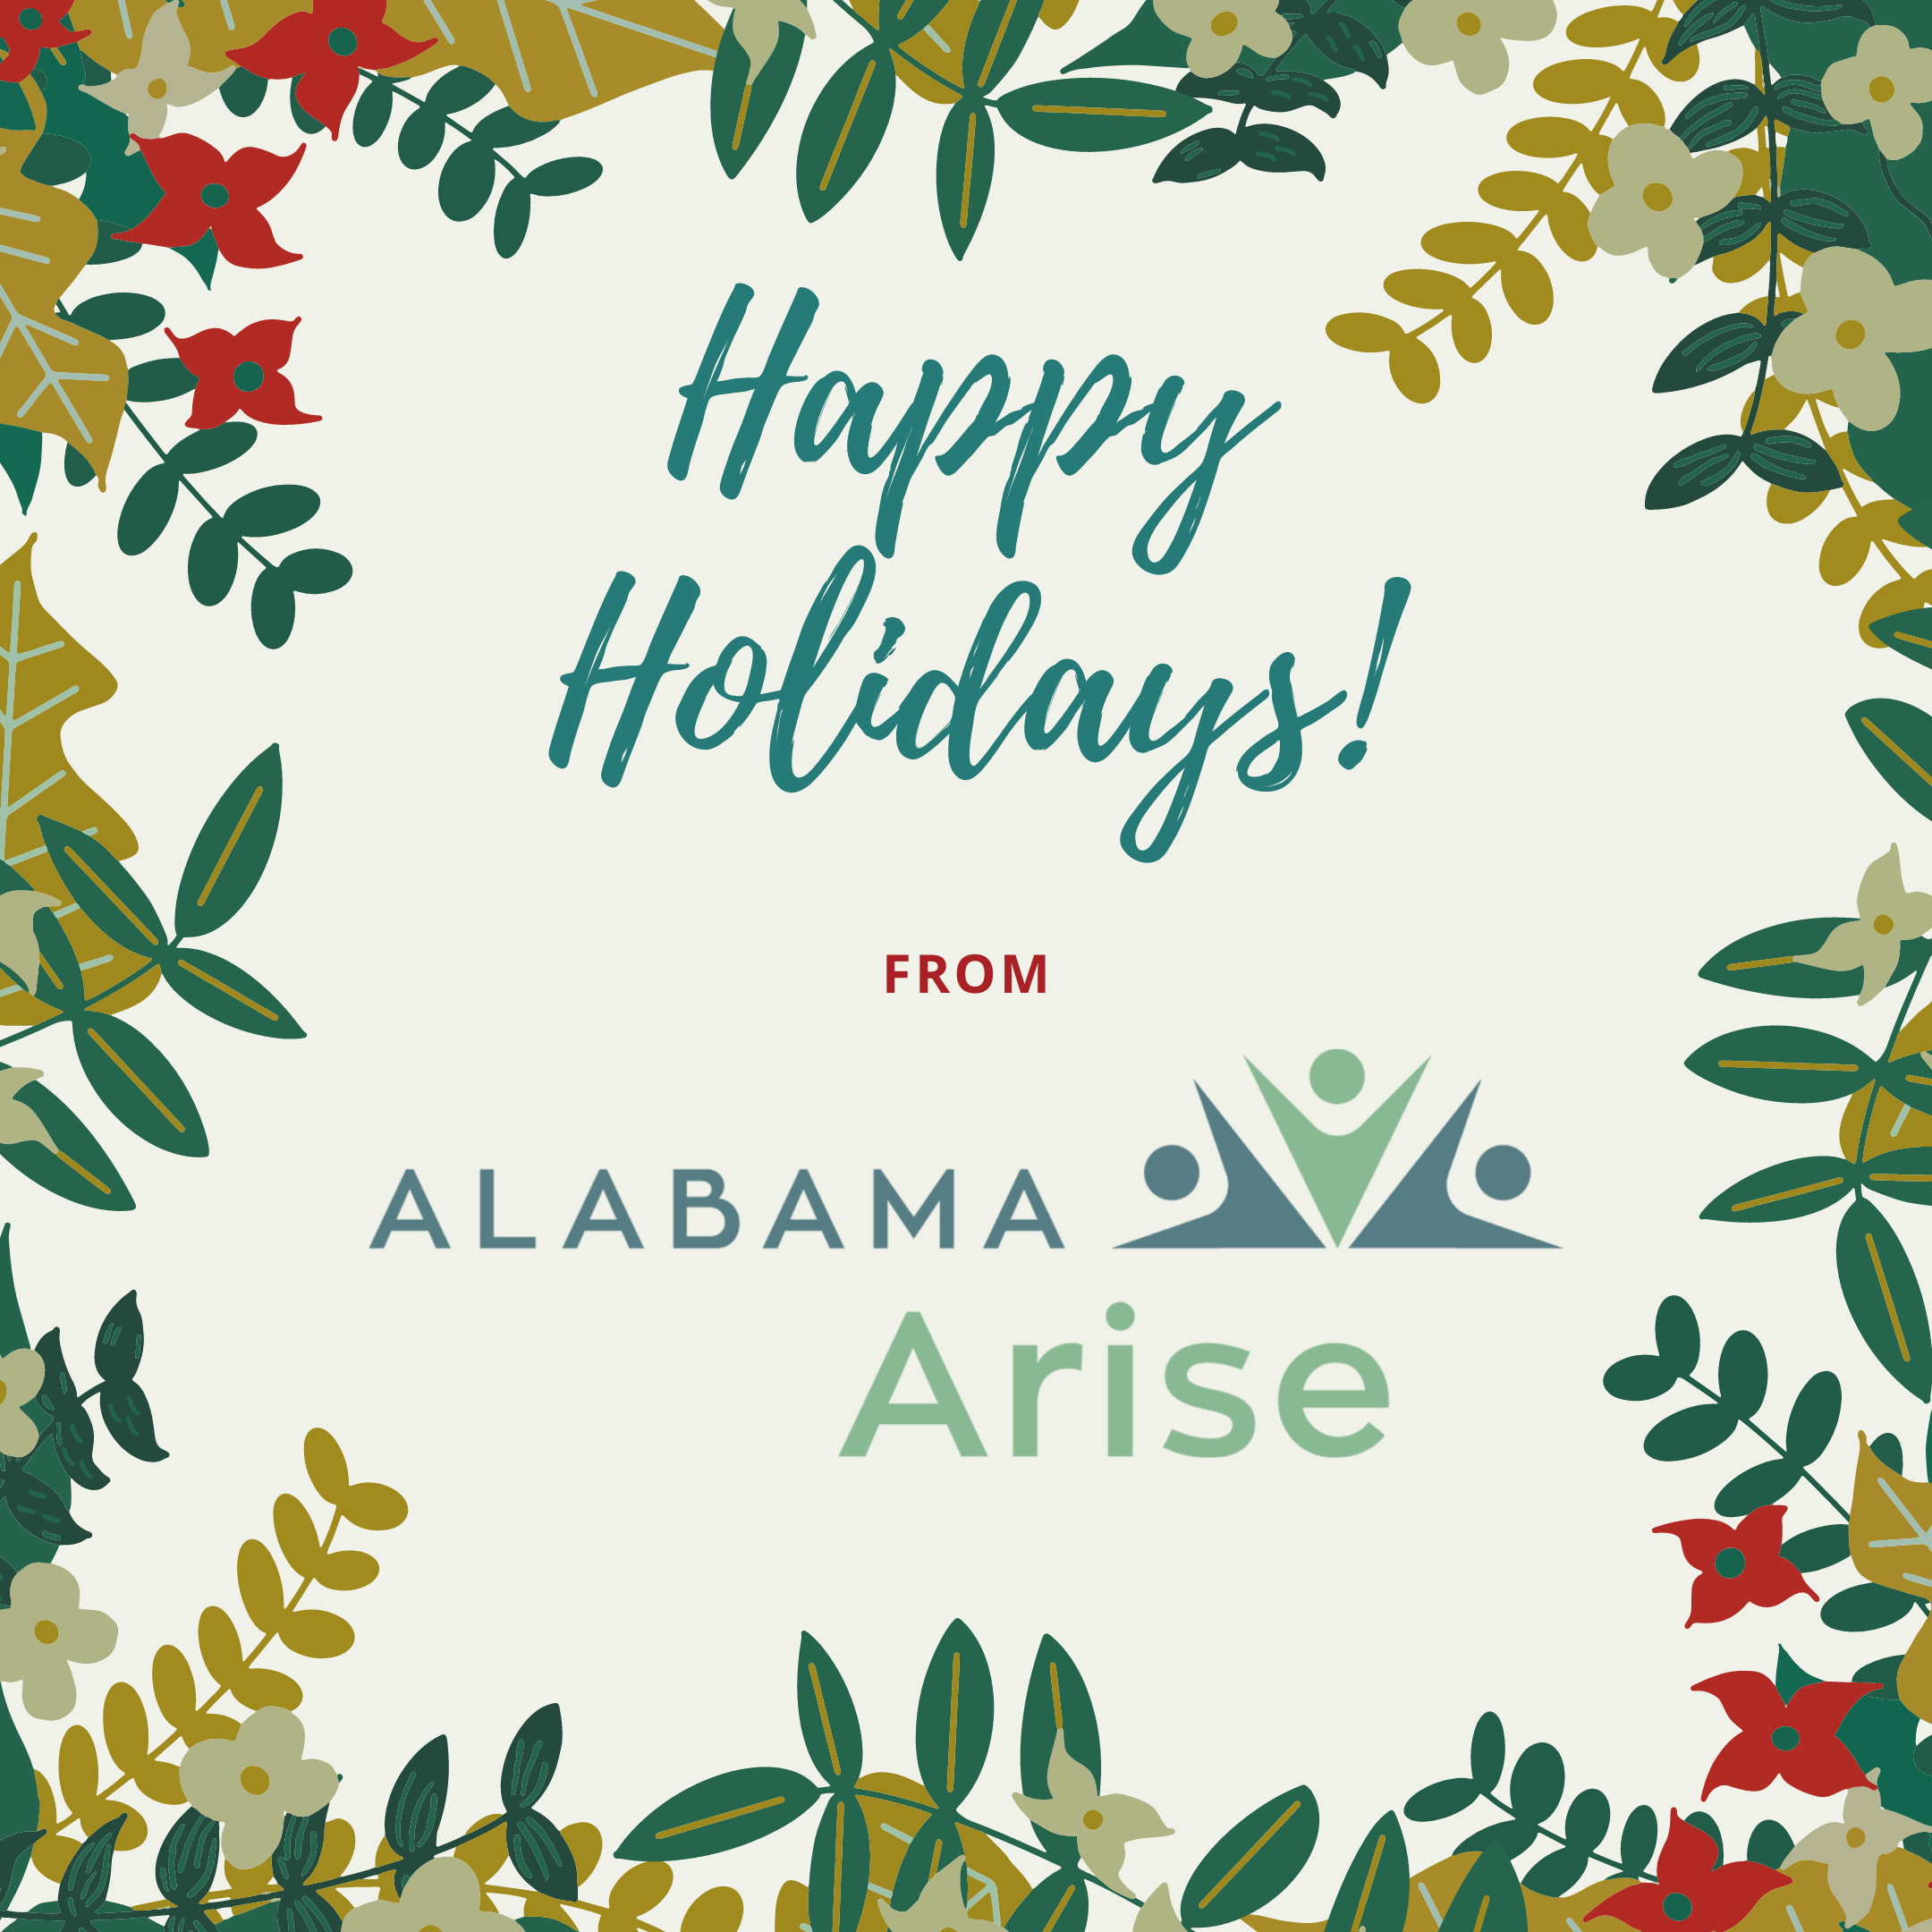 Happy Holidays from Alabama Arise